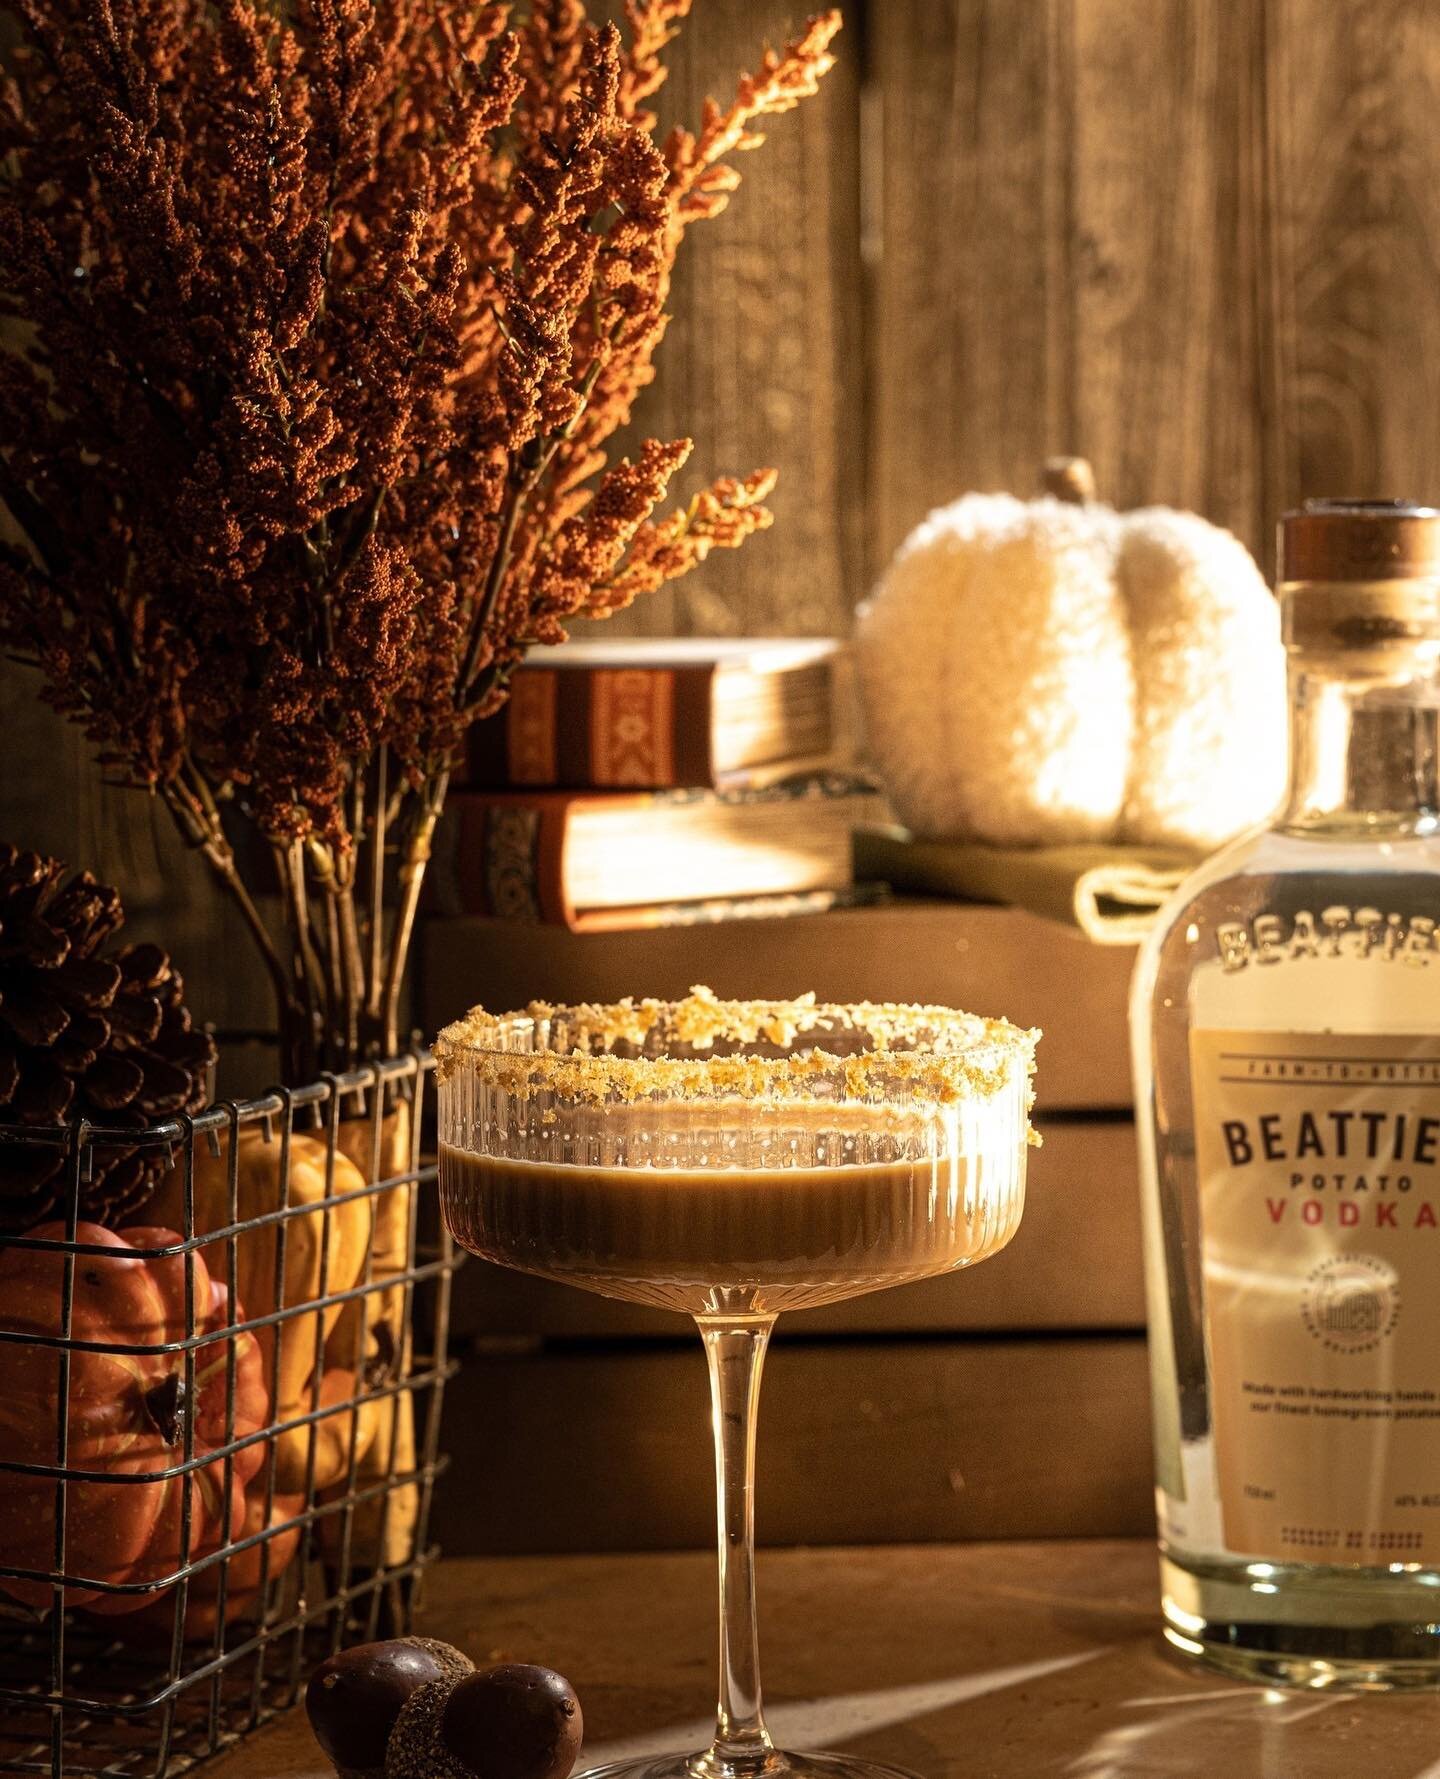 We're currently hooked on this fall-themed cocktail by @beattiespremiumvodka 🤎

Try out their Hazelnut and Cream Espresso Martini! 
🍂 1.5 oz Beattie's Premium Vodka⁠
🍂 1 oz Hazelnut liqueur⁠
🍂 .5 oz Baileys
🍂 1 oz Espresso ⁠

Pour all ingredient